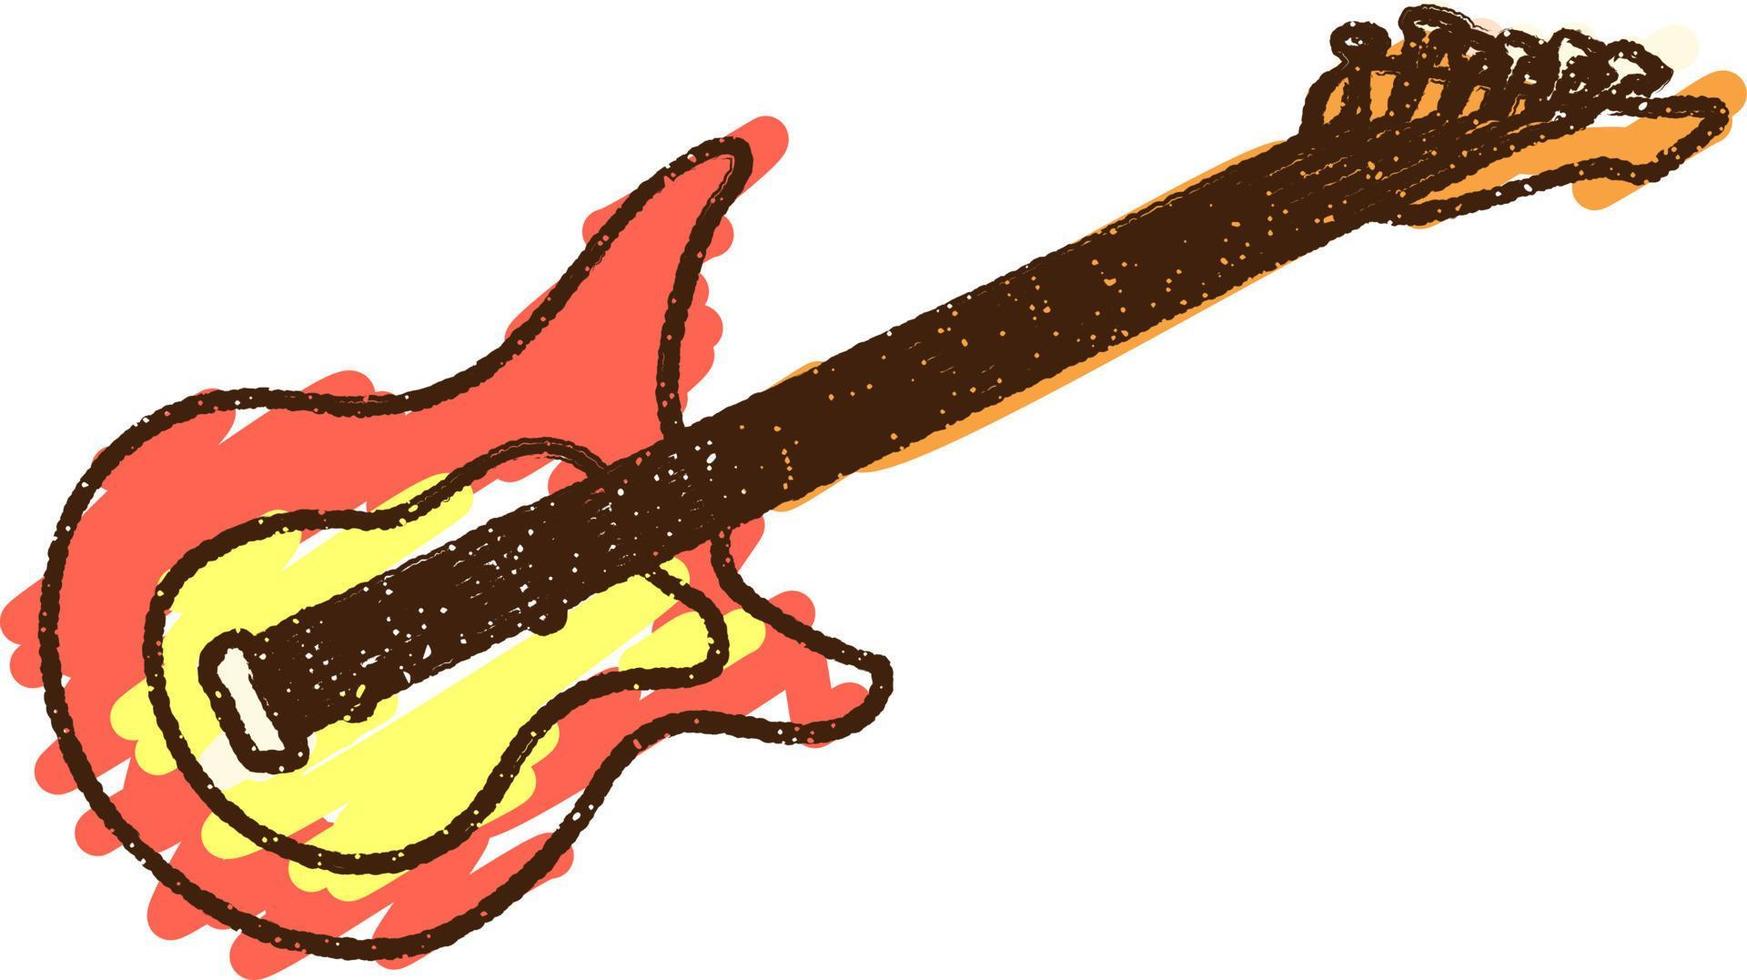 dibujo de tiza de guitarra electrica vector